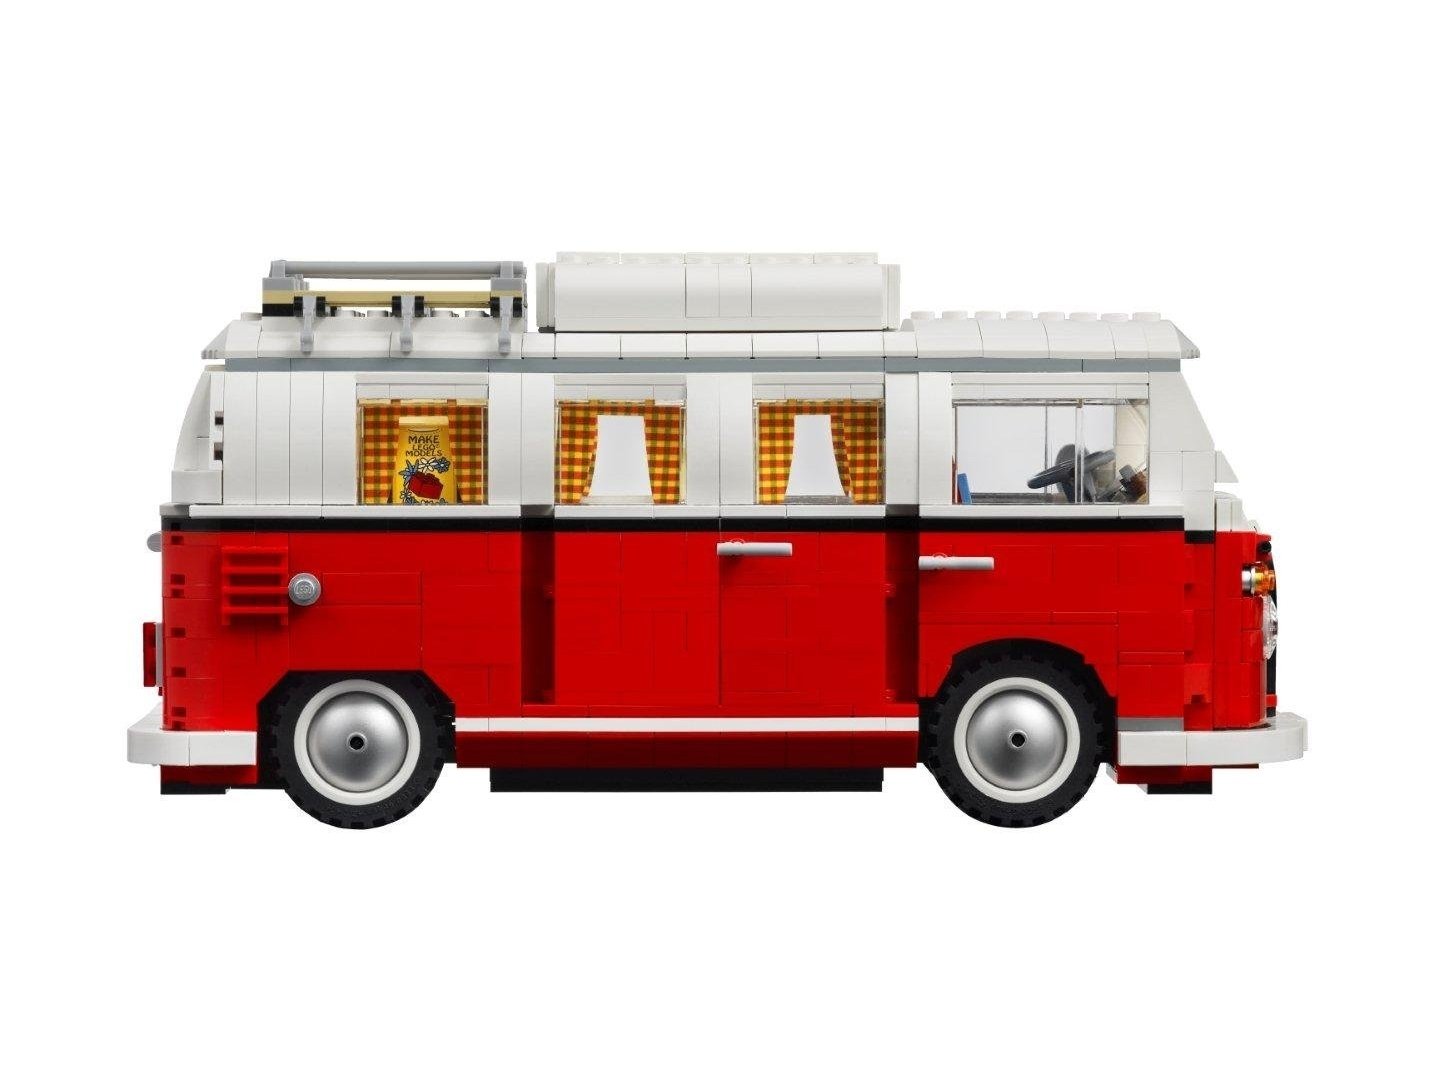 LEGO 10220 Creator Expert Mikrobus kempingowy Volkswagen T1